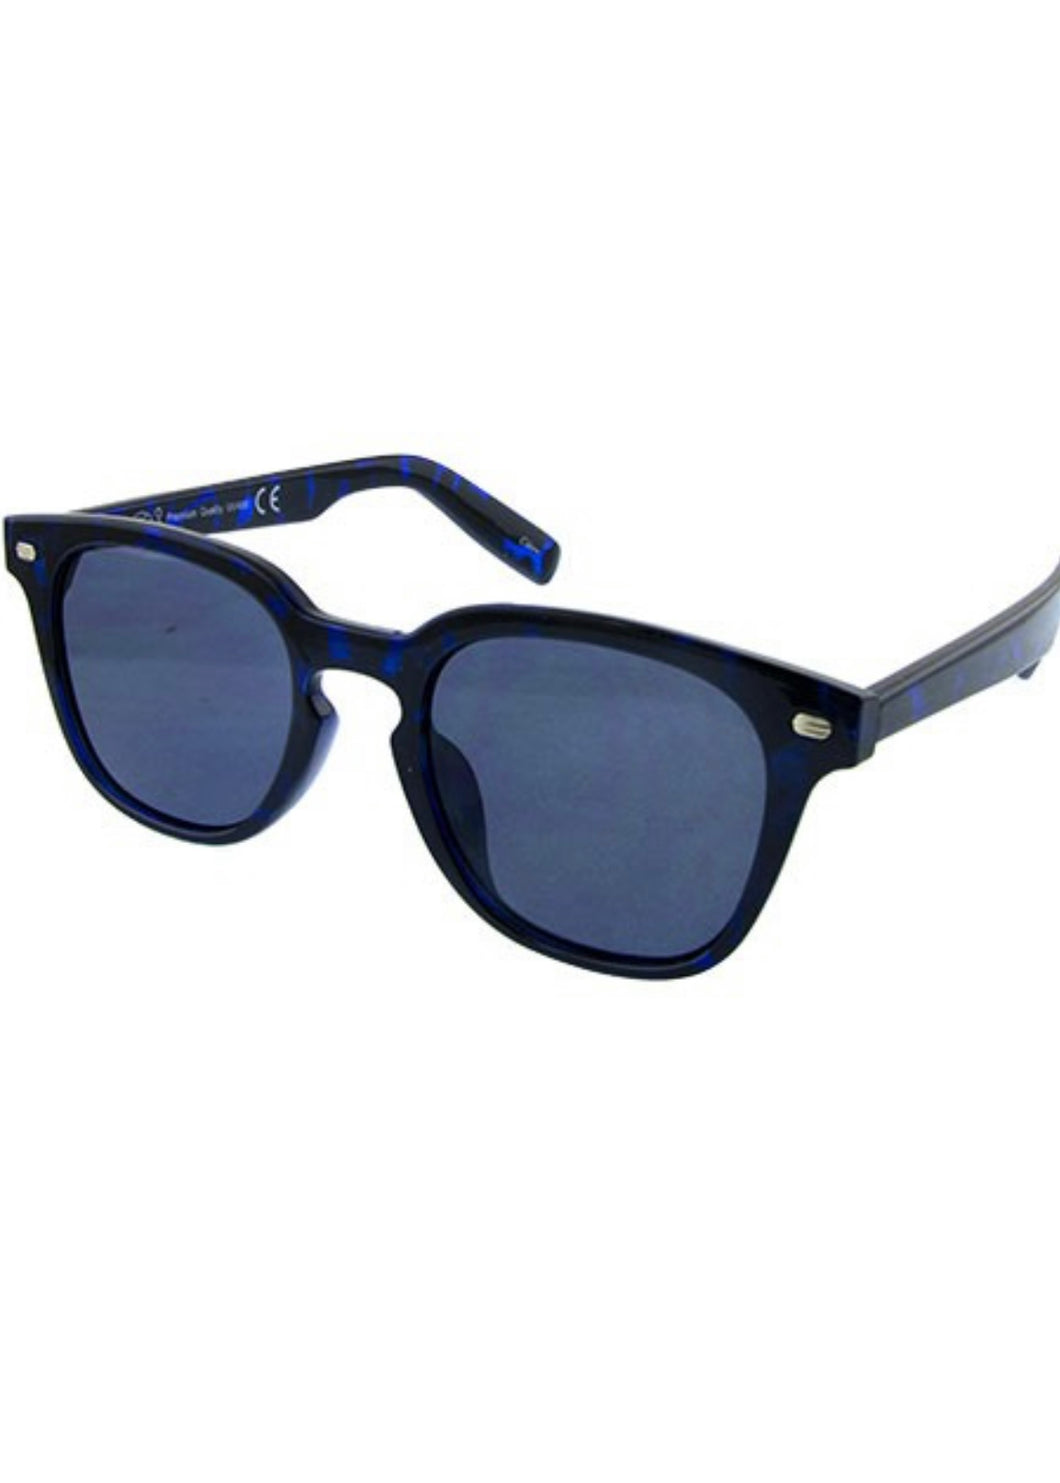 Good Ones Blue Sunglasses